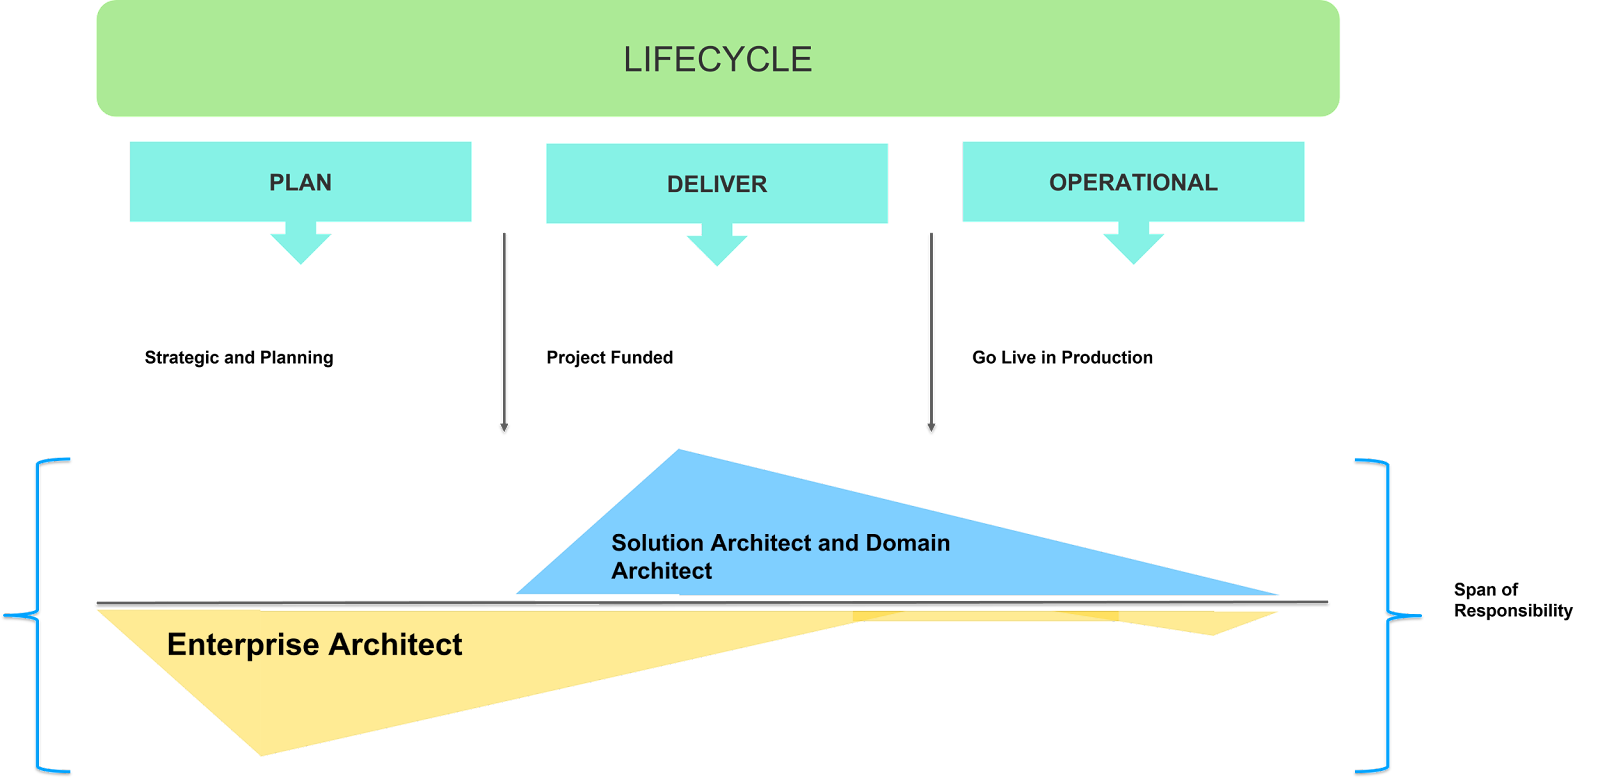 Life cycle diagram